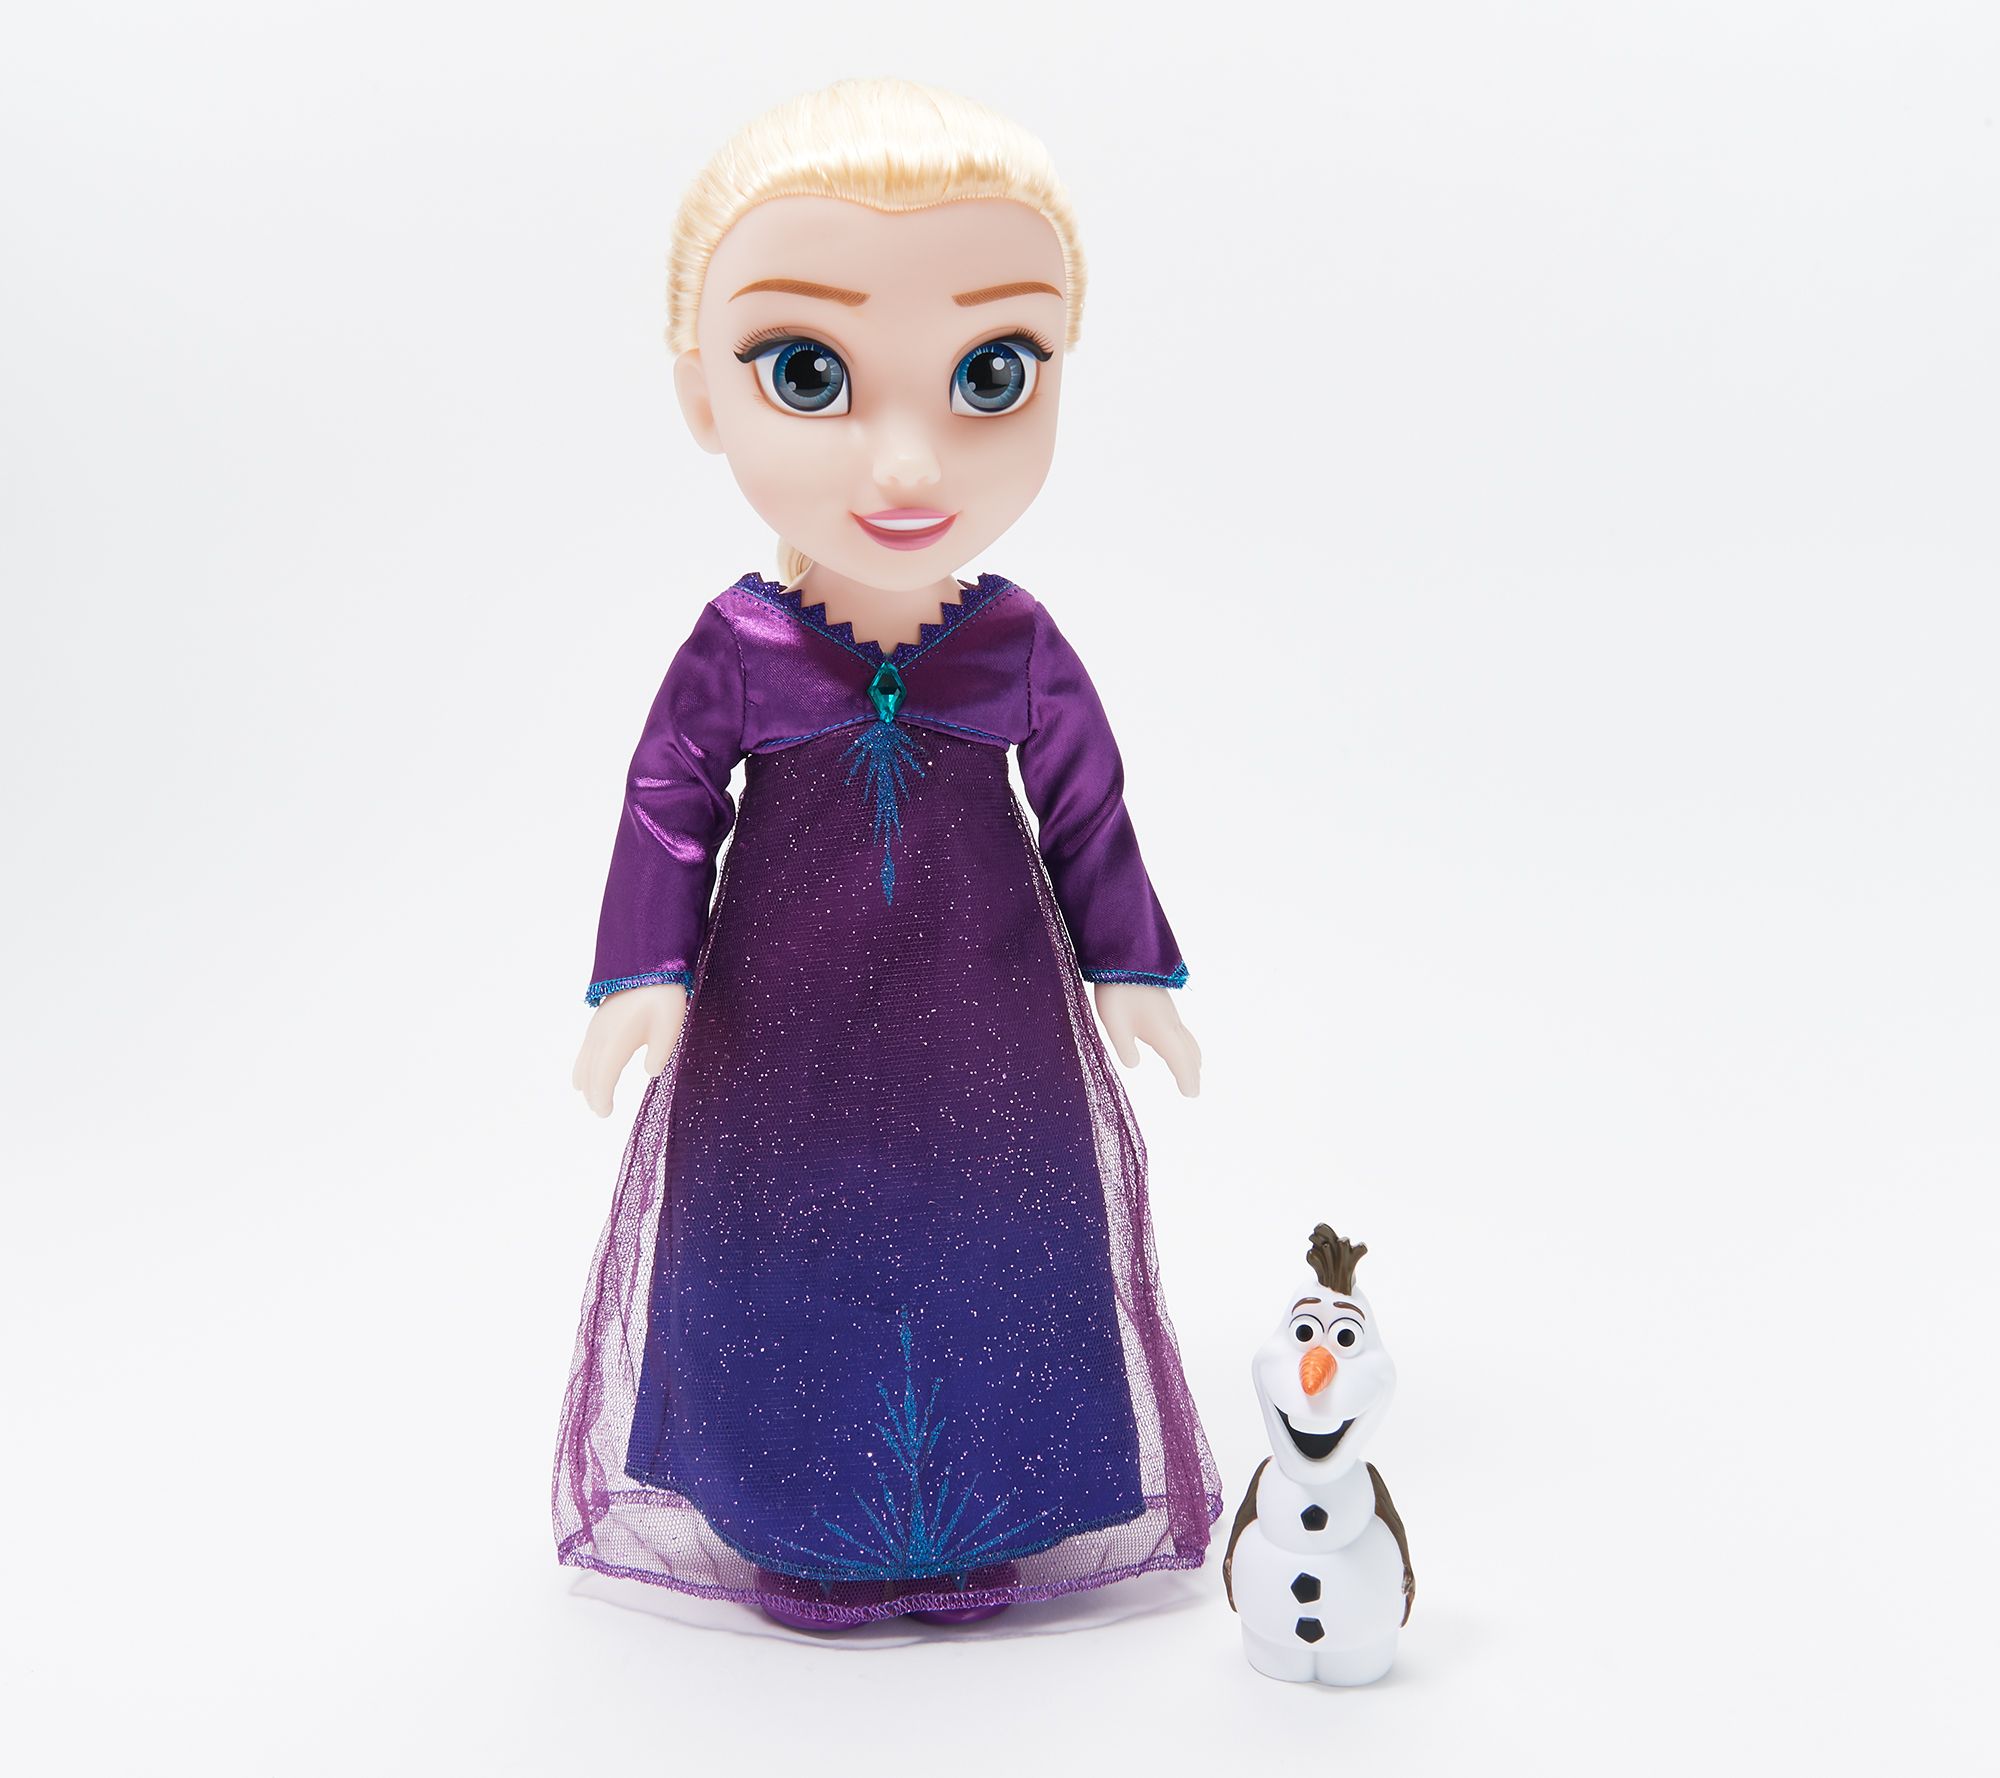 frozen 2 singing doll